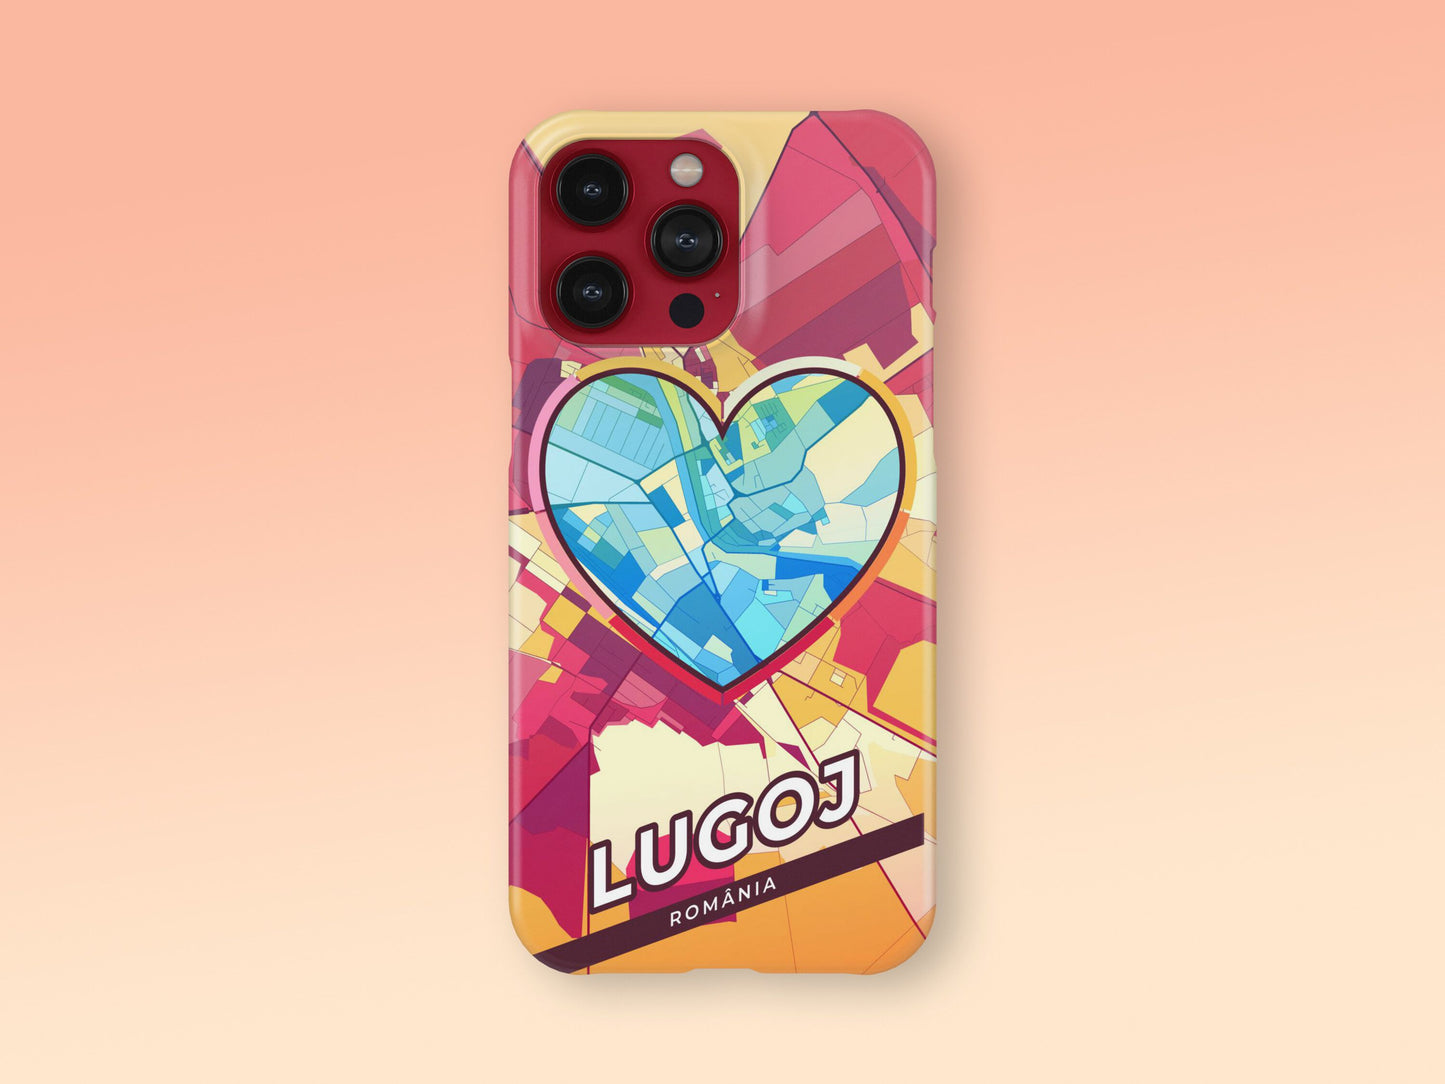 Lugoj Romania slim phone case with colorful icon. Birthday, wedding or housewarming gift. Couple match cases. 2